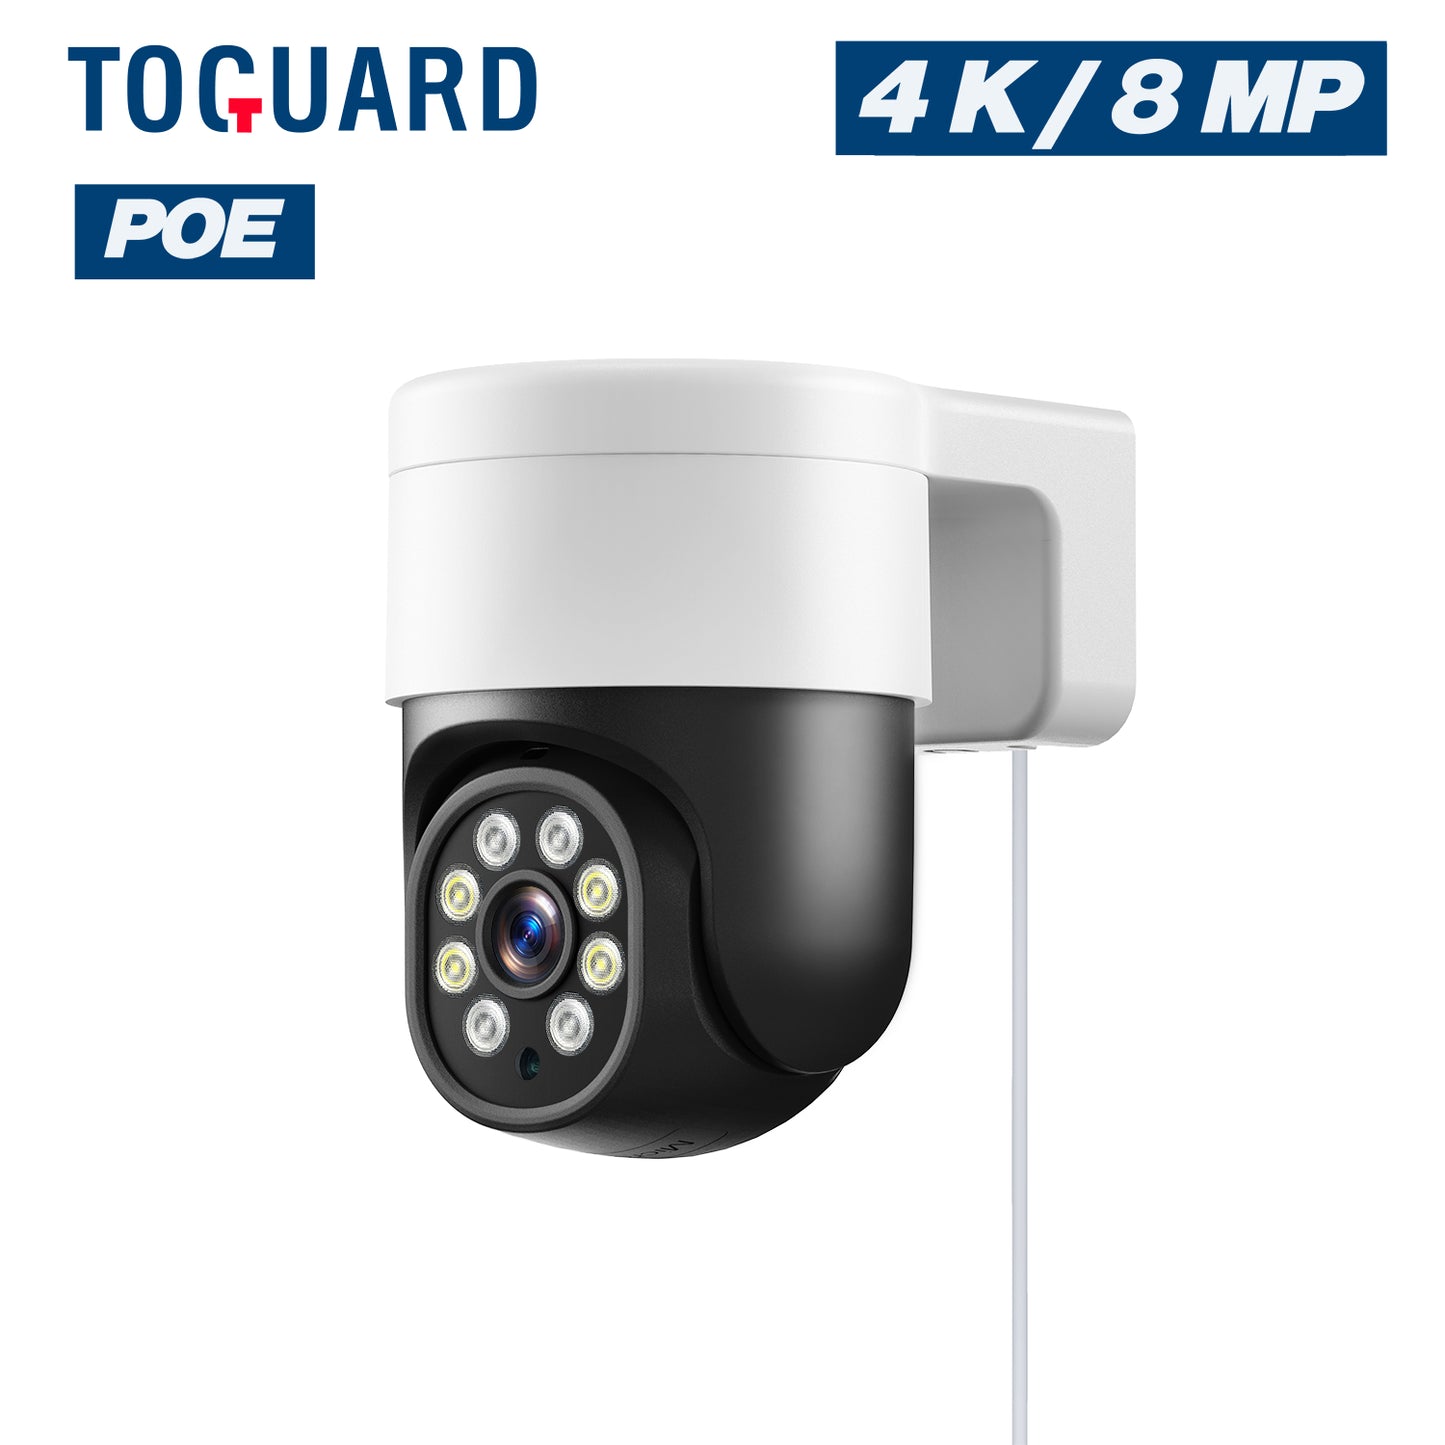 Toguard SC45 4K/8MP POE Security Camera Outdoor Dome Surveillance Camera